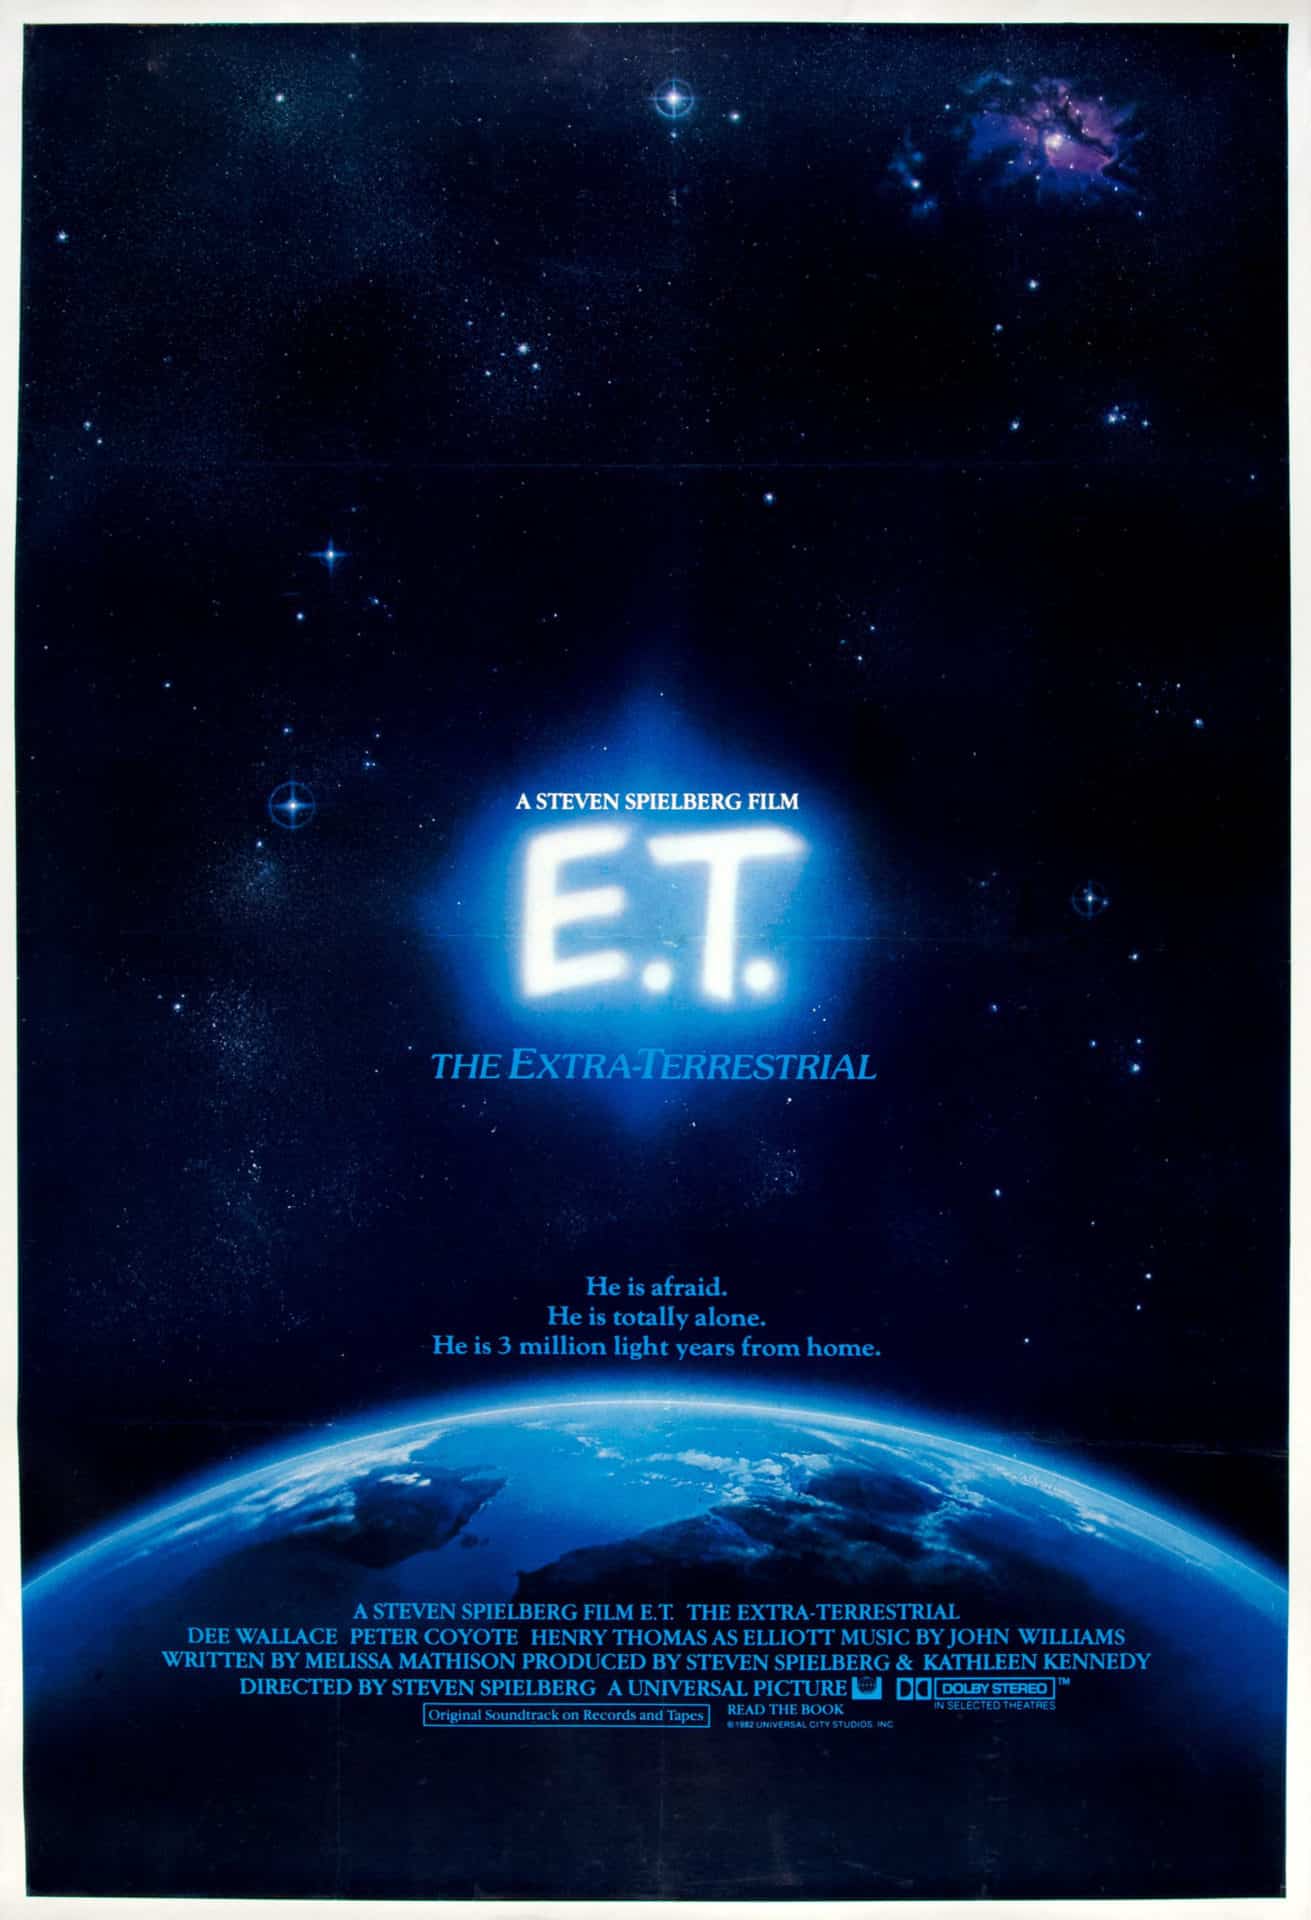 E.T. THE EXTRA-TERRESTRIAL Trailers (1982) Steven Spielberg 